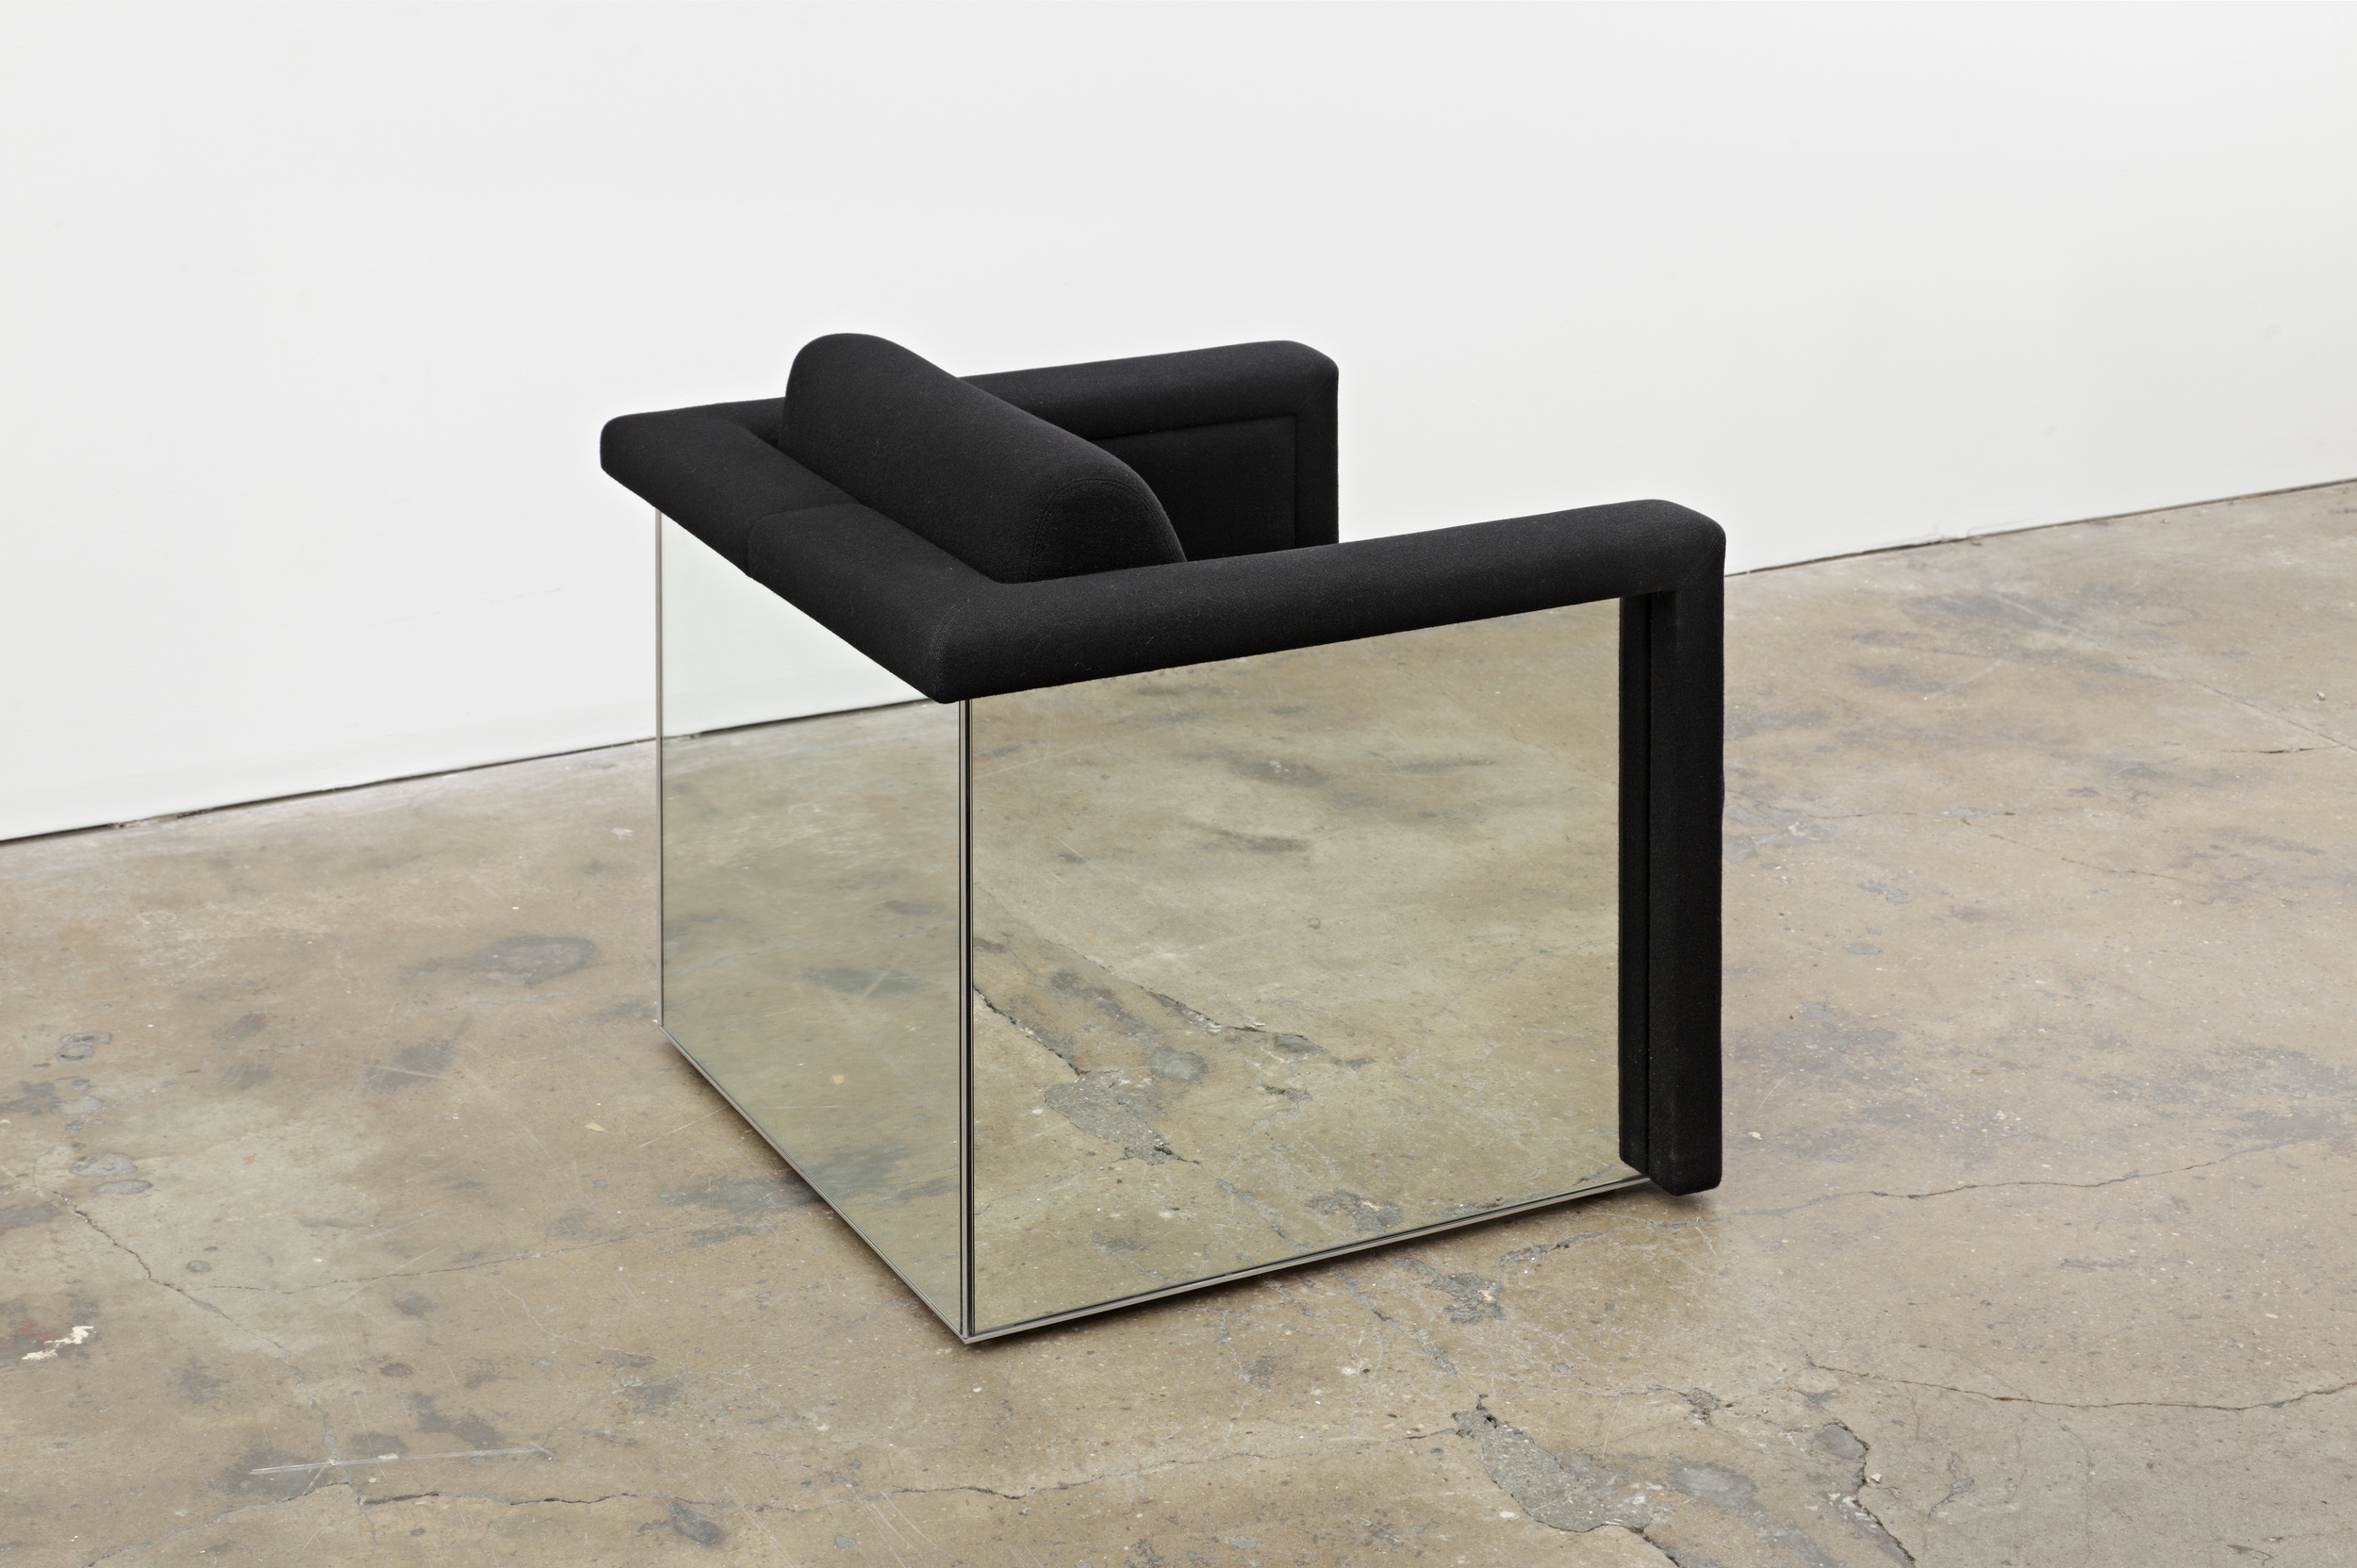  Robert &amp; Trix Haussmann Lounge Seating 1988 Mirrored sofa and chair 3 pieces: 138 x 72 x 86 cm; 82 x 72 x 86 cm; 82 x 72 x 86 cm 